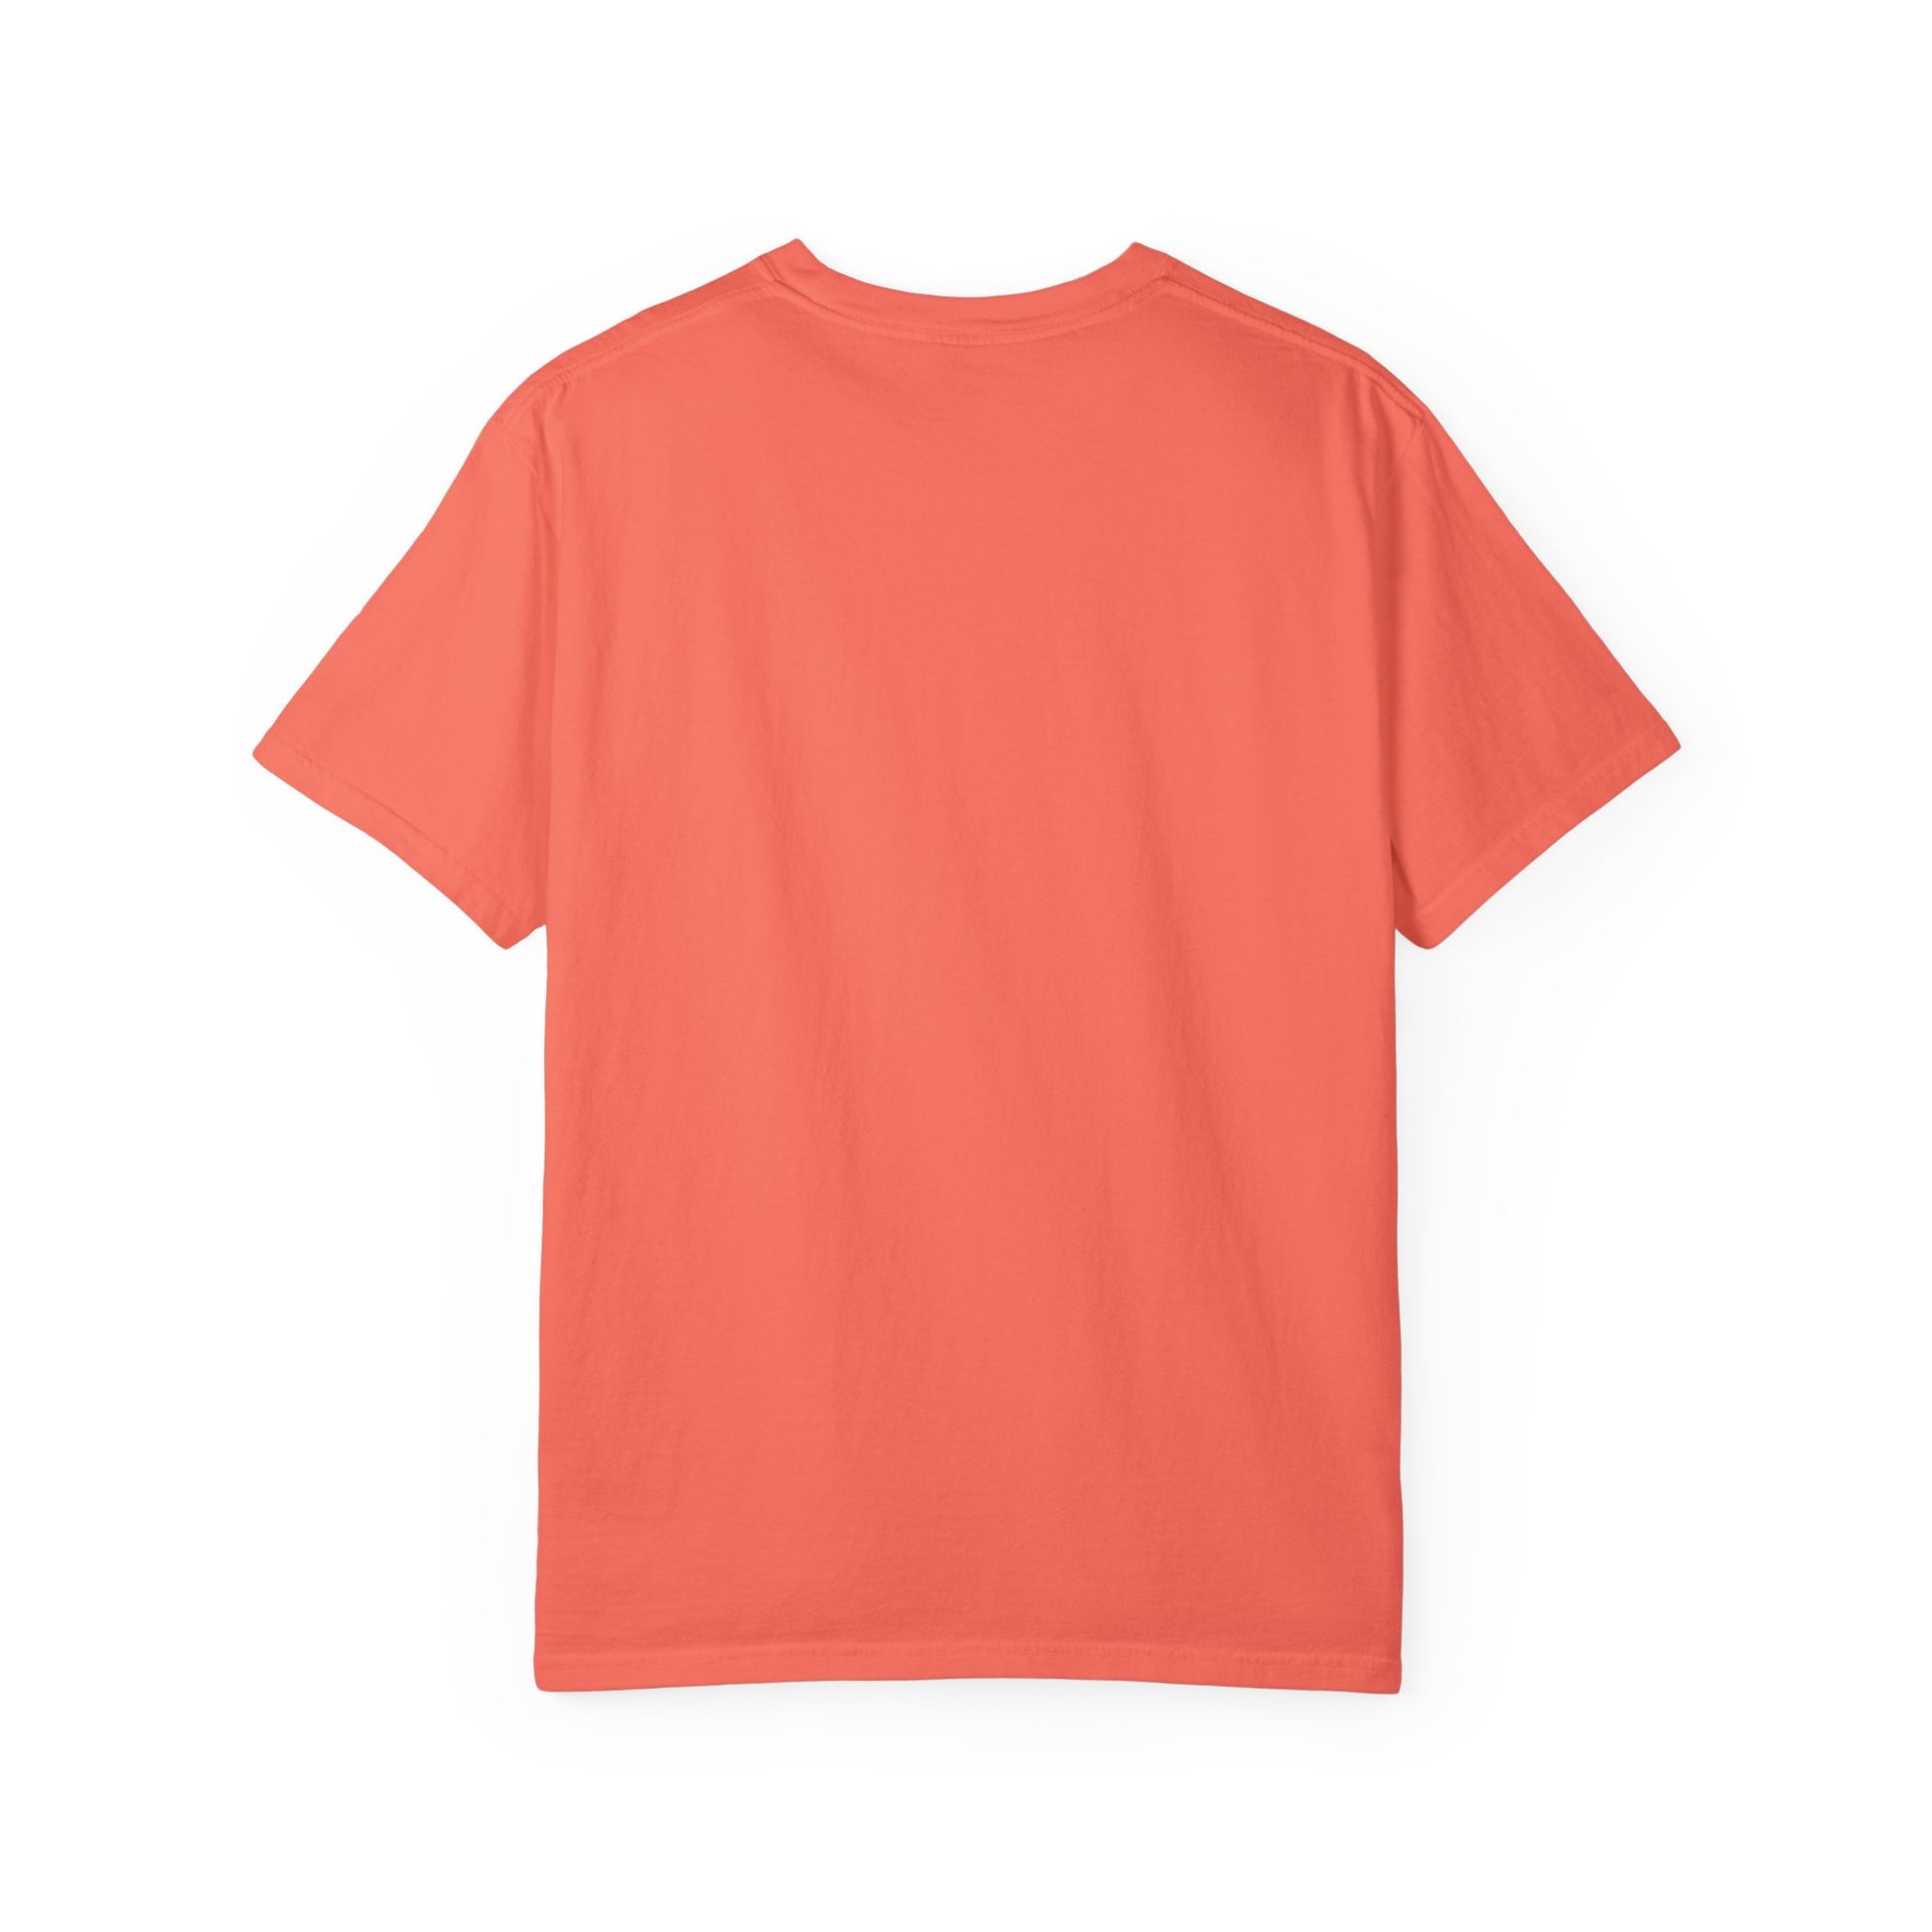 Hip Hop Teddy Bear Graphic Unisex Garment-dyed T-shirt Cotton Funny Humorous Graphic Soft Premium Unisex Men Women Bright Salmon T-shirt Birthday Gift-31